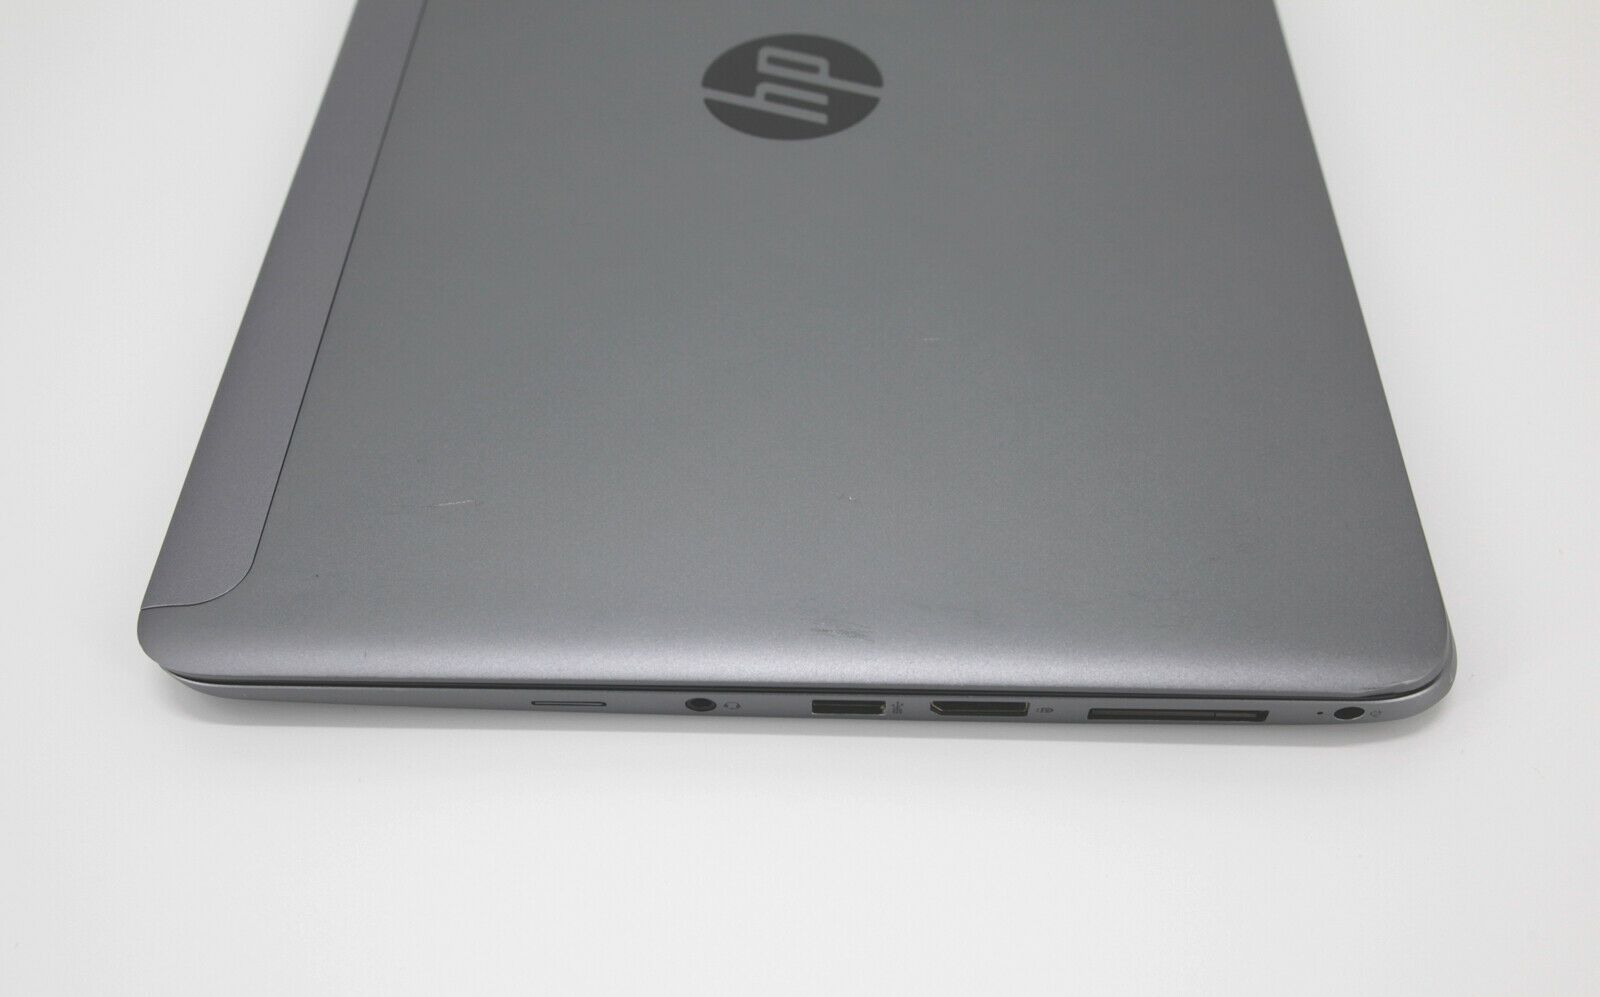 HP EliteBook 1040 G1 Laptop: Core i5, 8GB RAM, 240GB, VAT, Warranty - CruiseTech